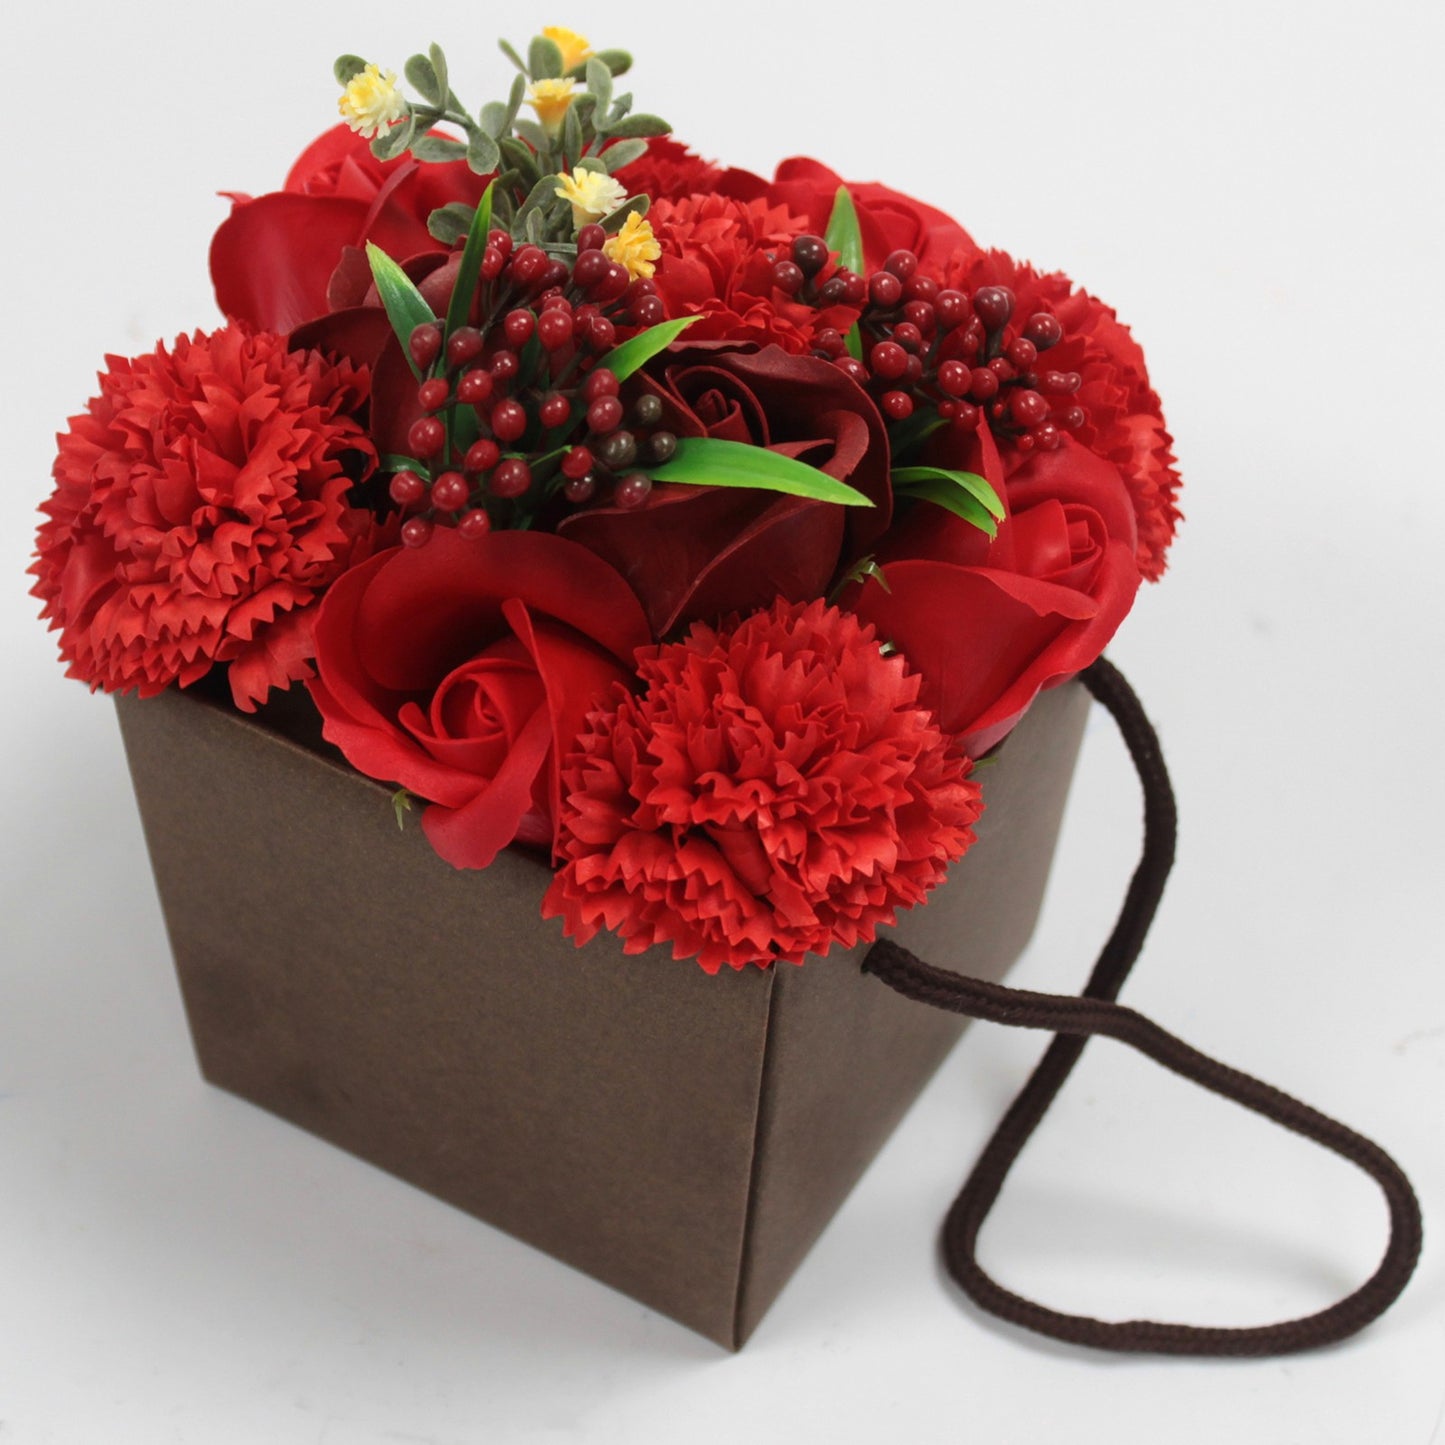 Soap Flower Bouquet - Red Rose & Carnation